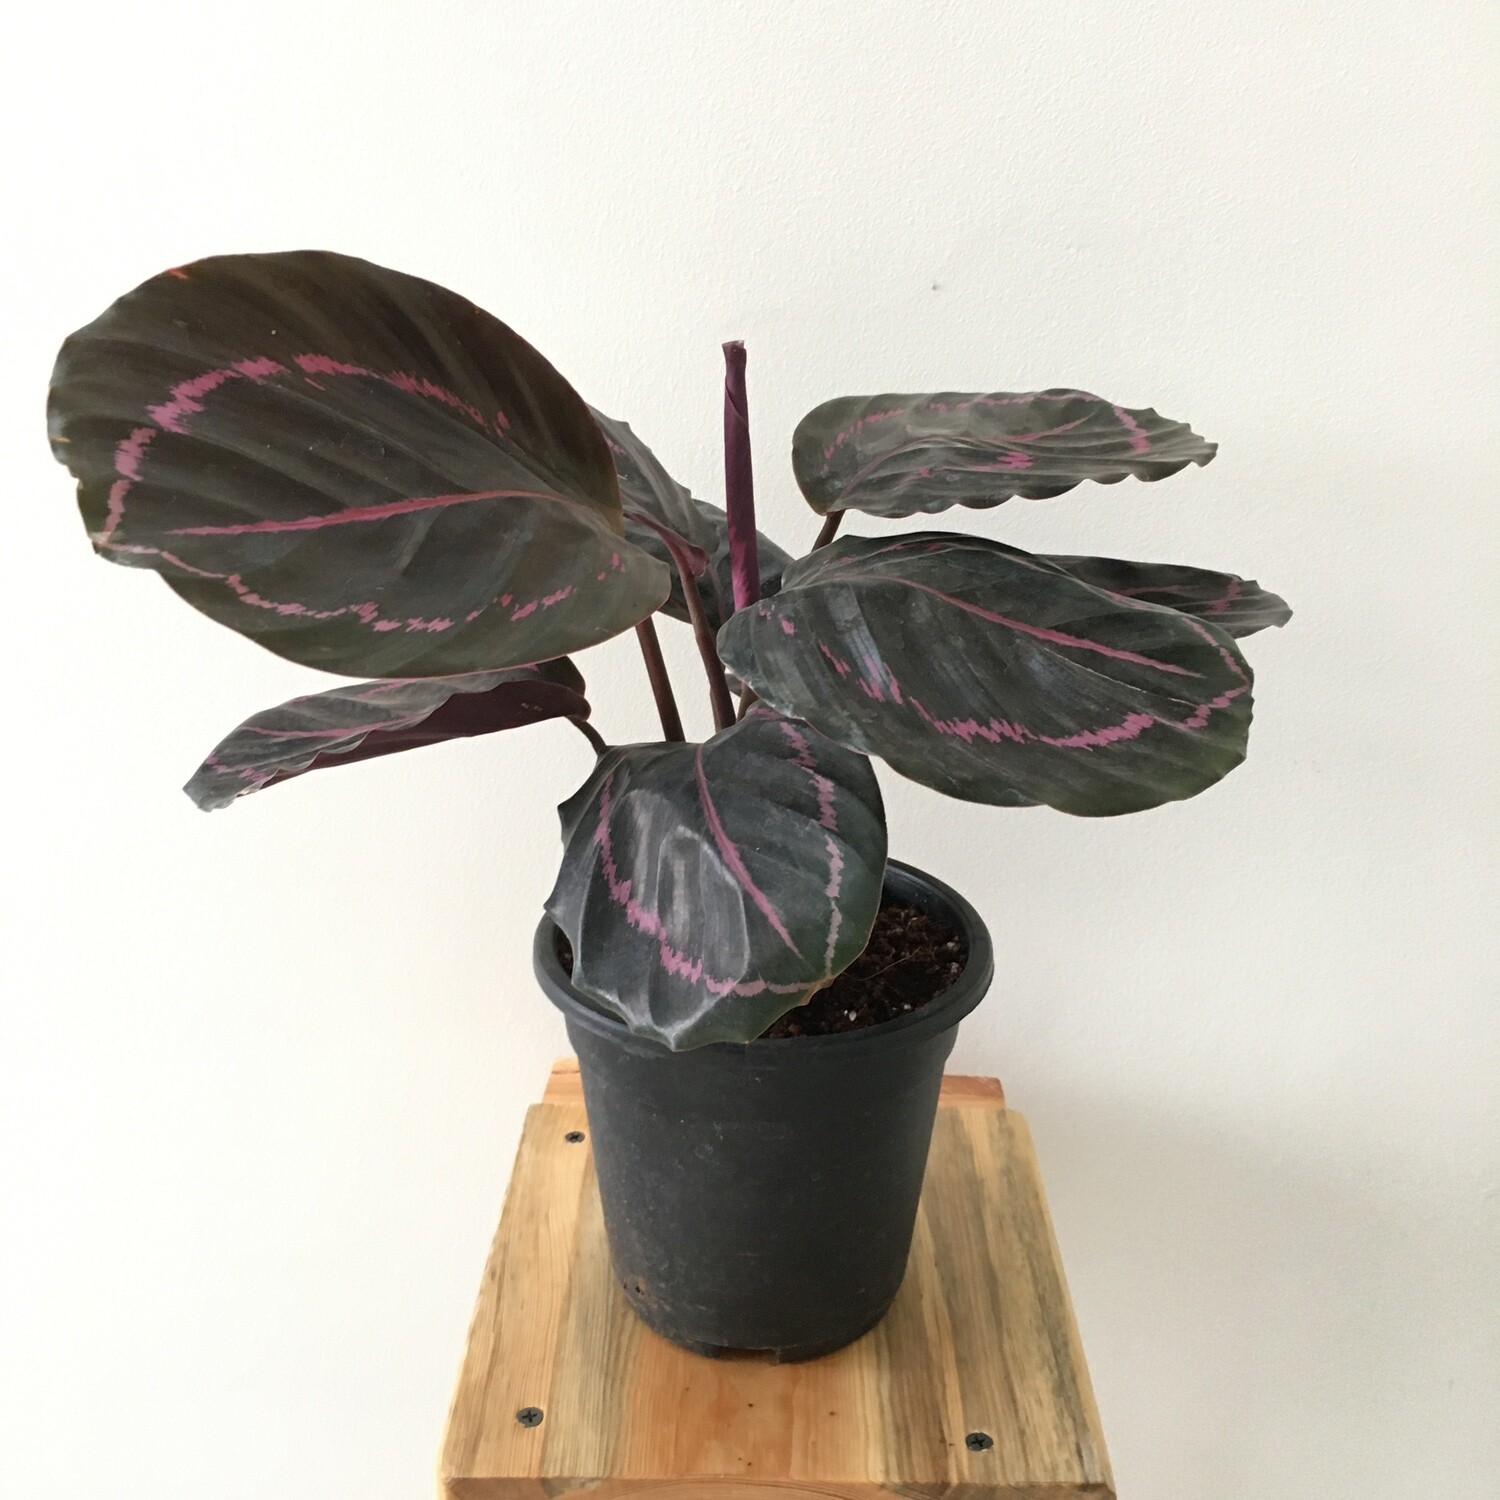 Calathea Roseapicta Plant in 4 inches Nursery Pot